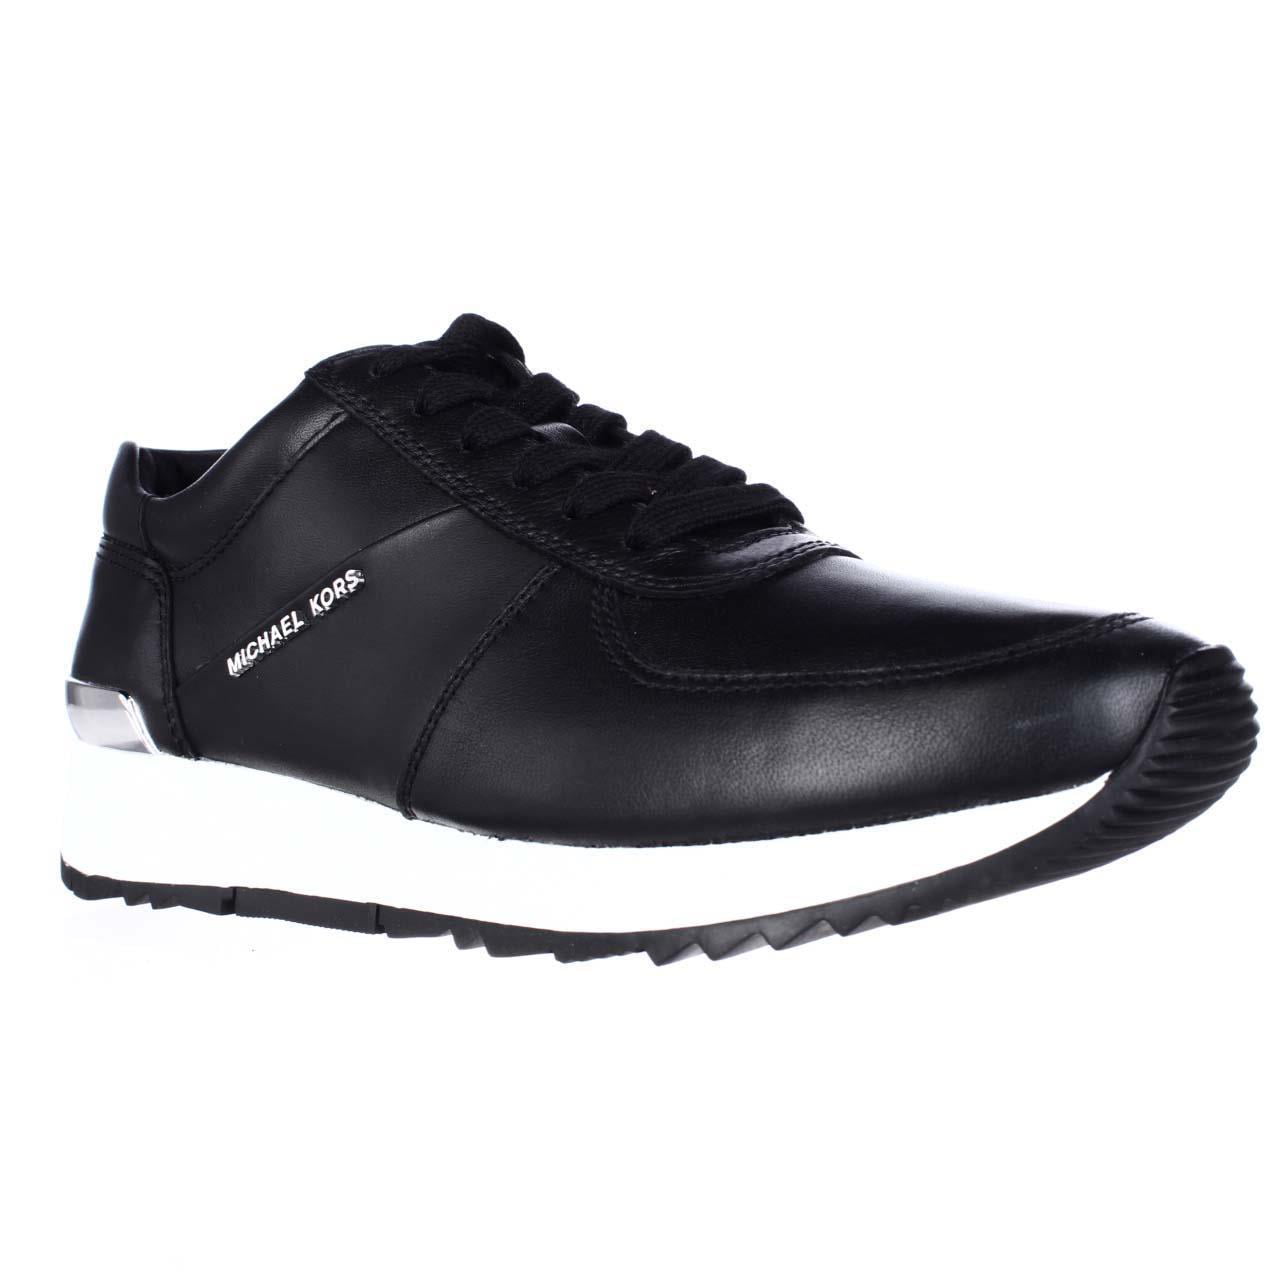 Michael Kors  Shoes  Michael Kors Allie Trainer Sneakers Charcoal Flannel  Size 75  Poshmark